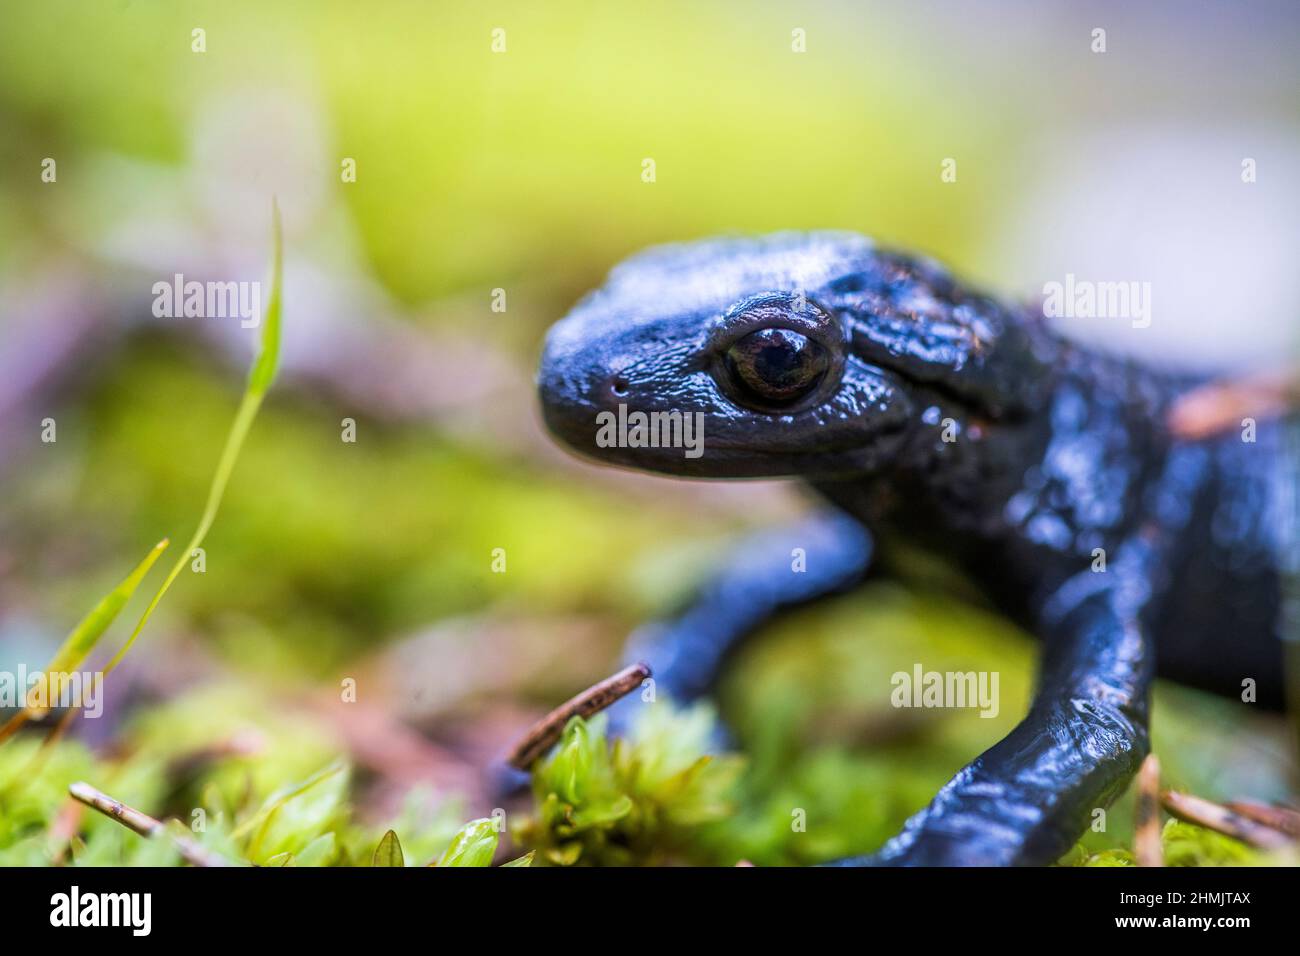 Alpine salamander (Salamandra atra atra) is a shiny black salamander found in the Alps. Stock Photo